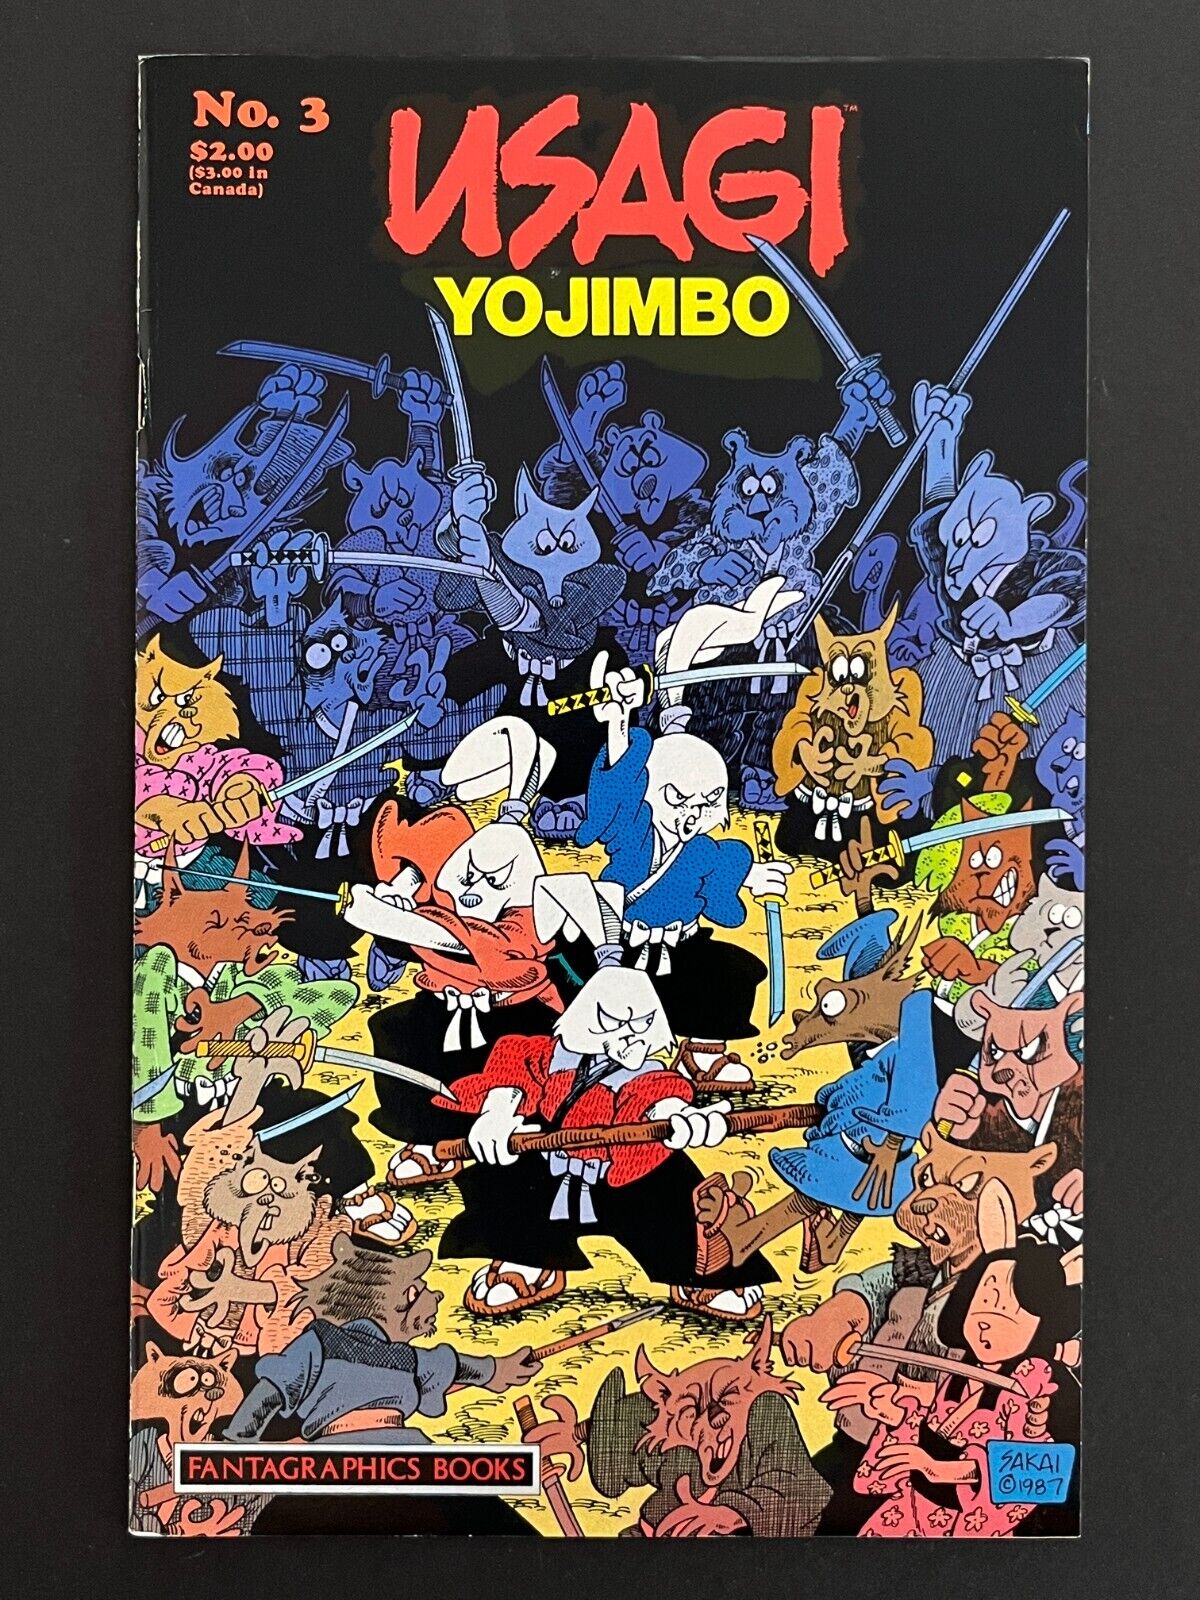 Usagi Yojimbo (volume 1) #3 - #35 SINGLE ISSUES (Fantagraphics Books, 1987-1992)